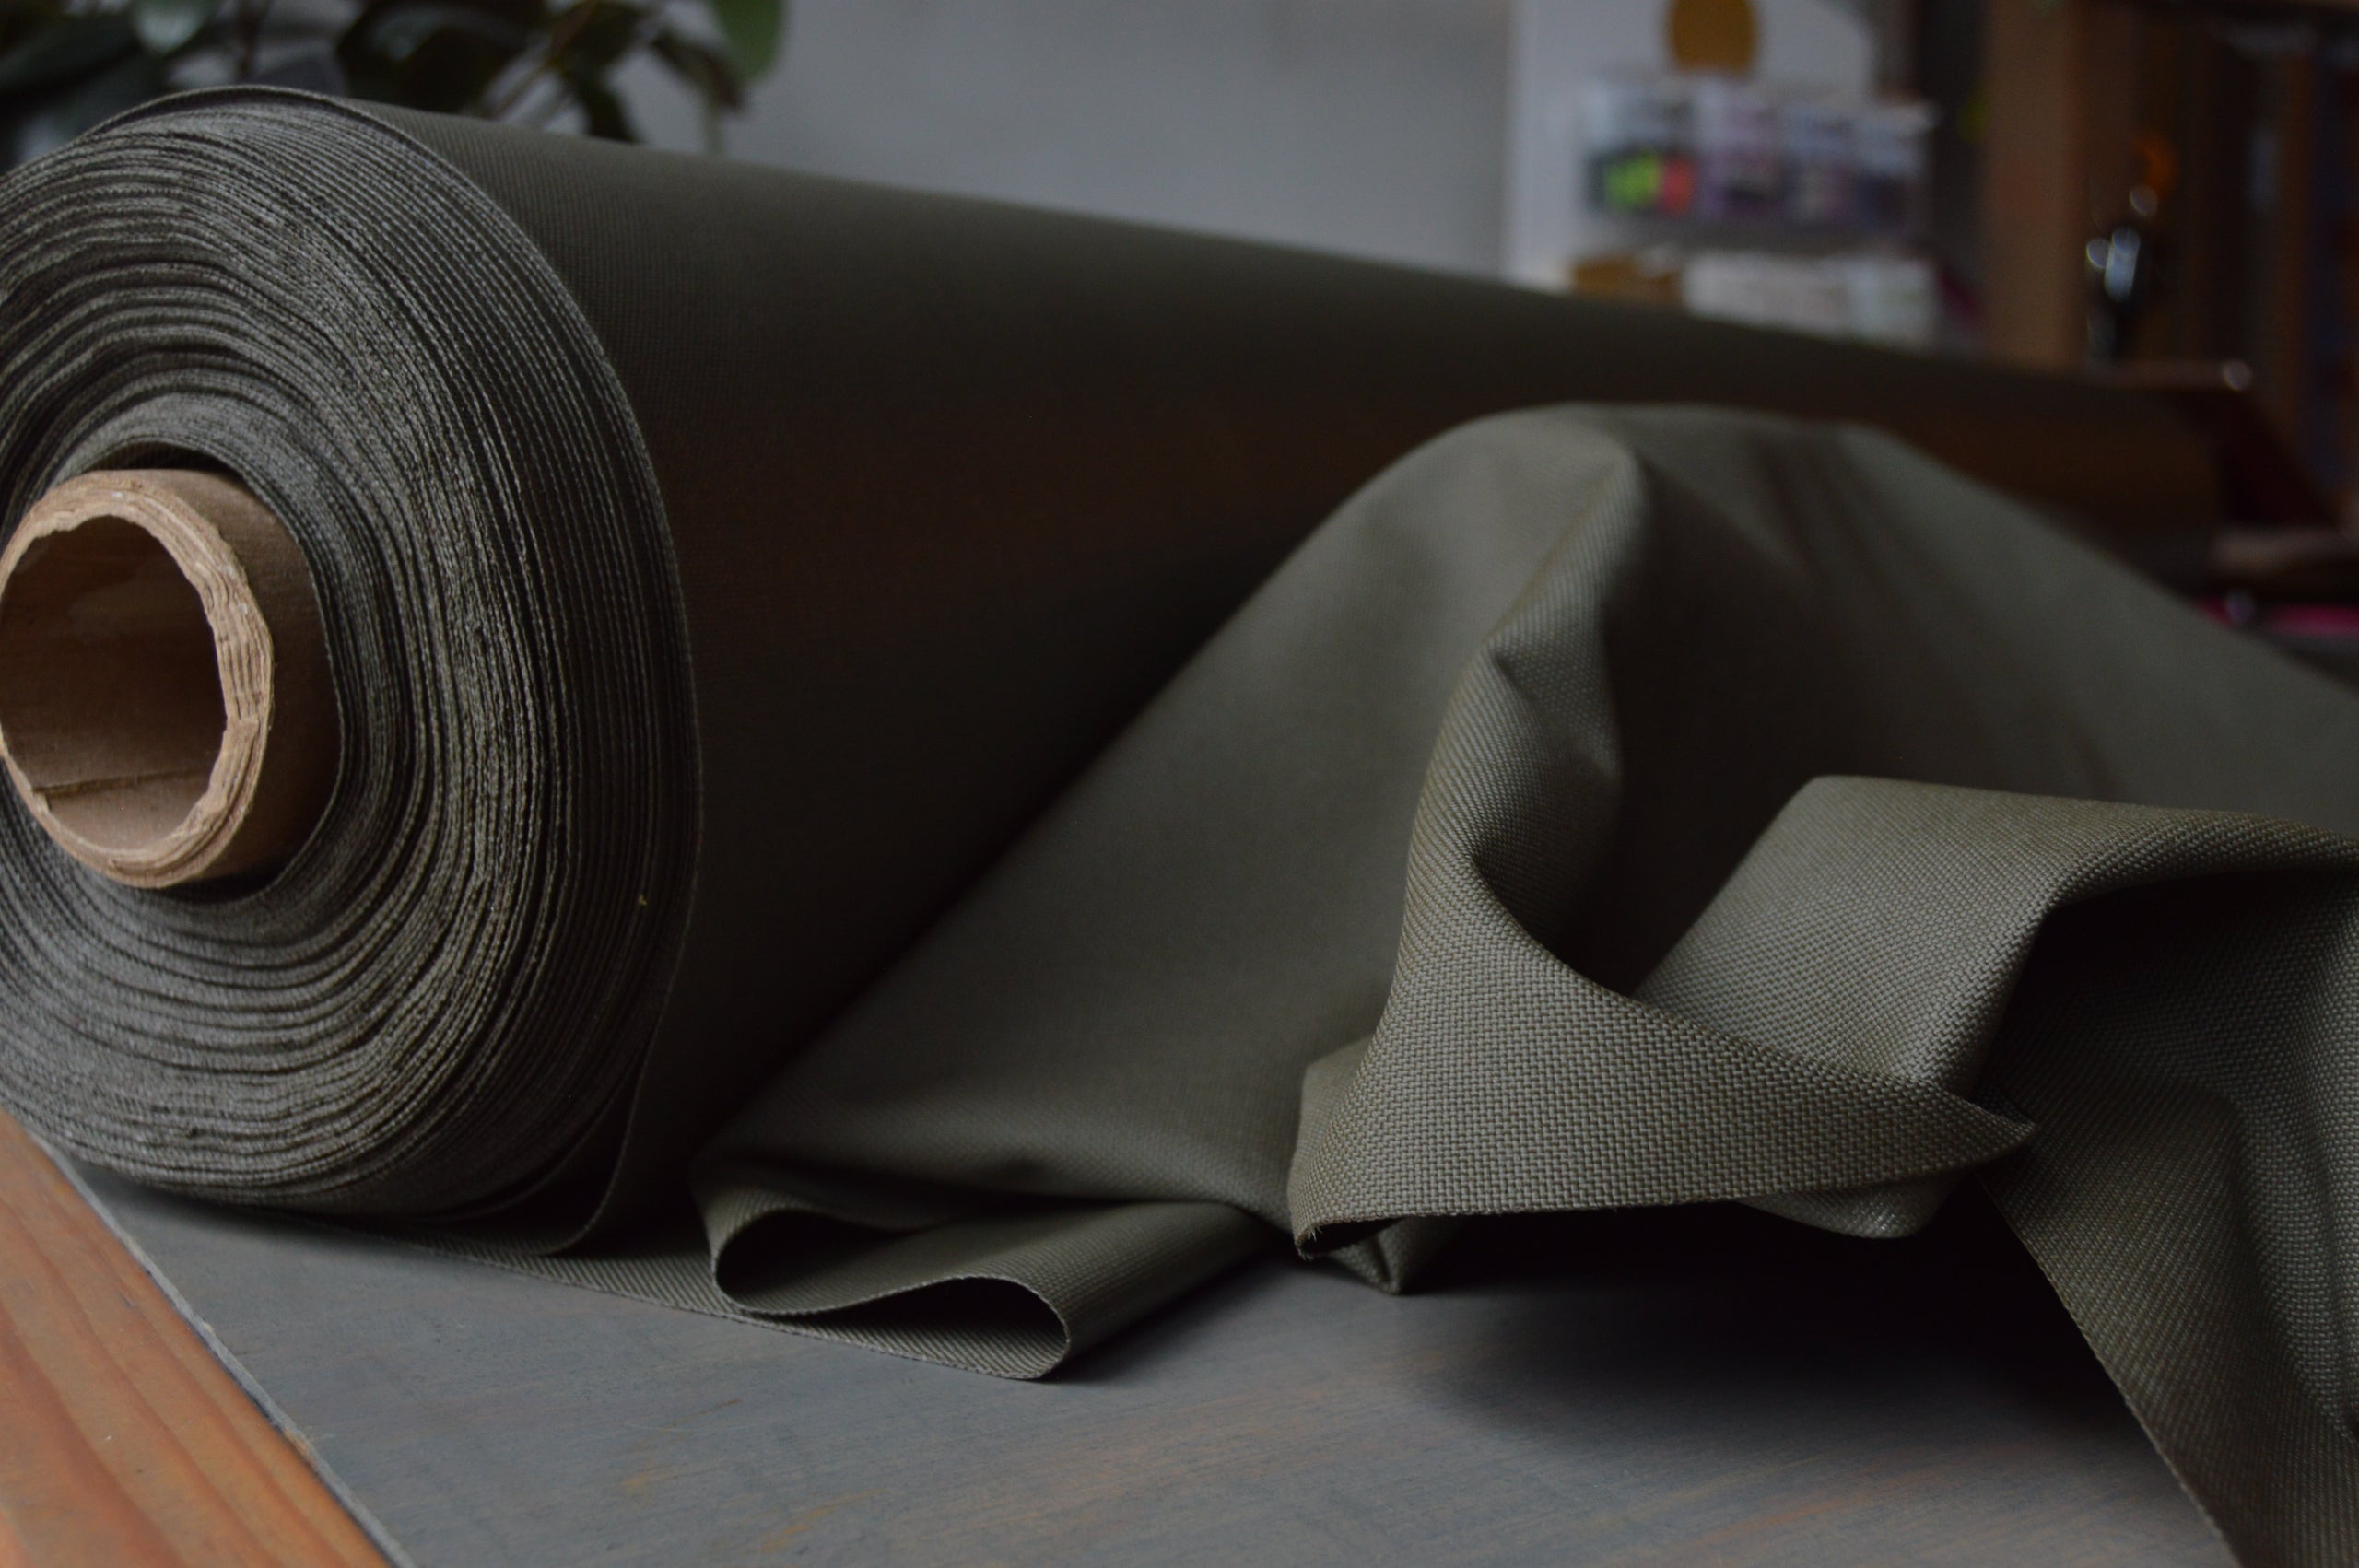 1000 Denier CORDURA® Nylon Fabric Mil-Spec MIL-DTL-32439, Type 1, Class 3